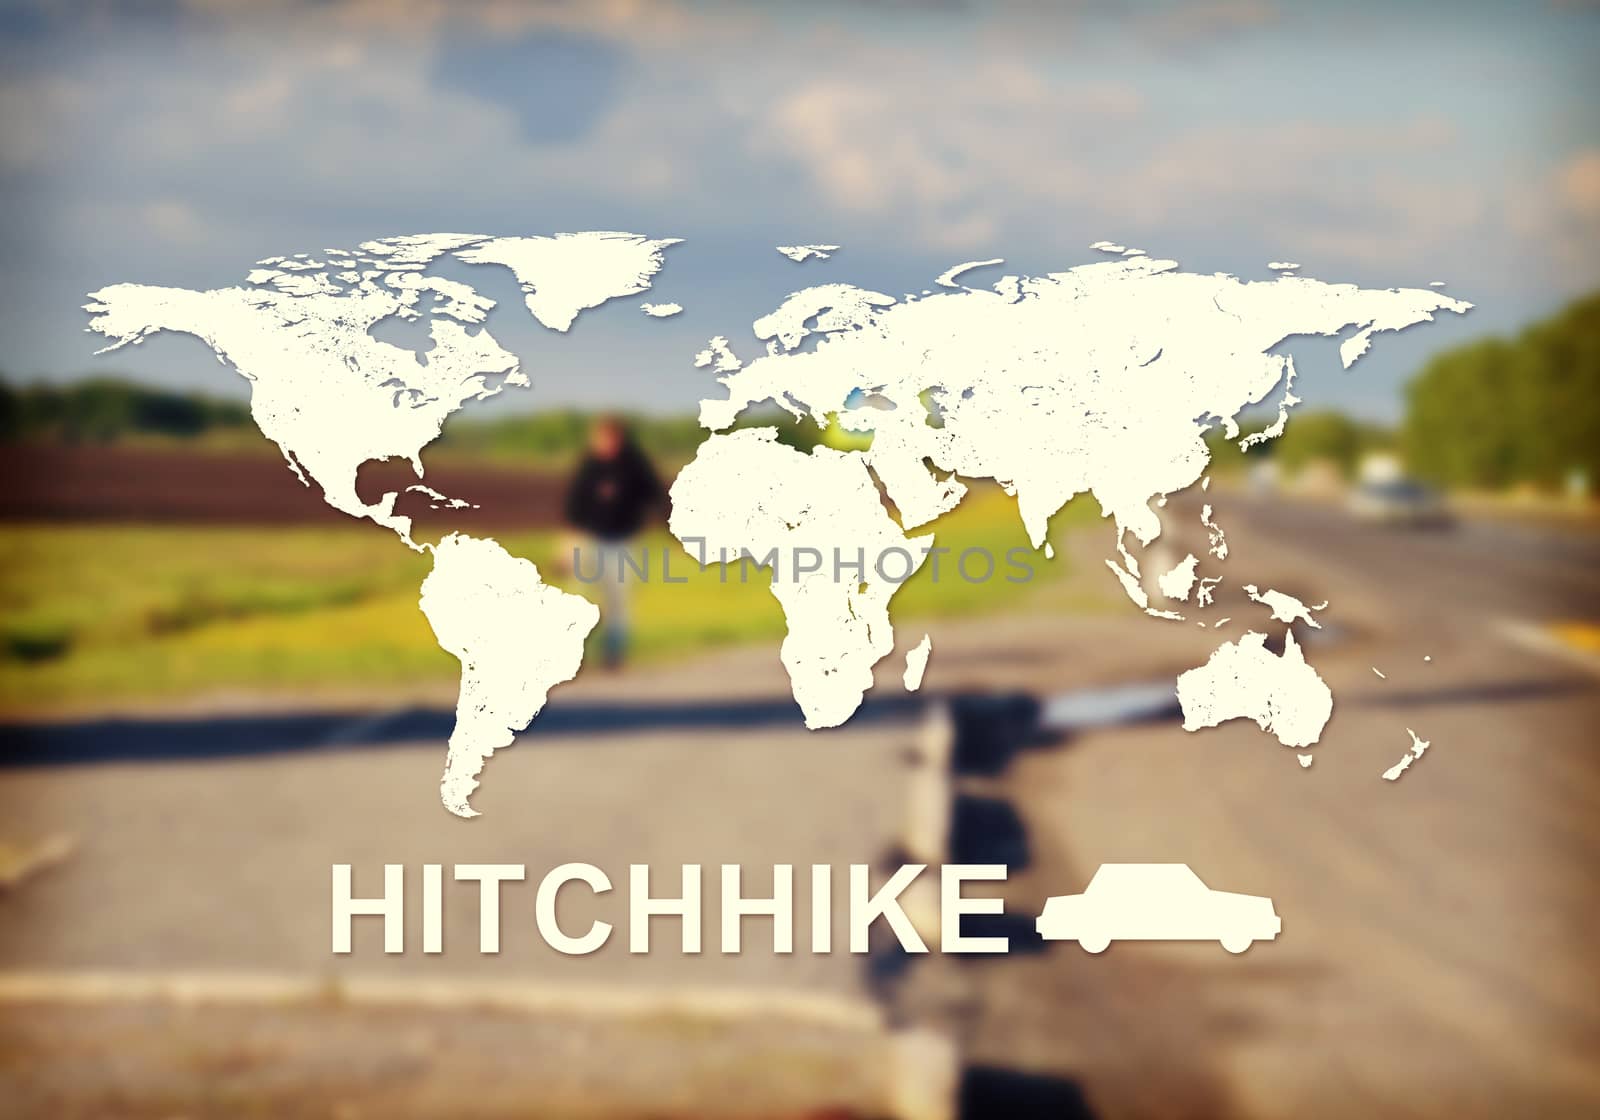 Hitchhike header by cherezoff